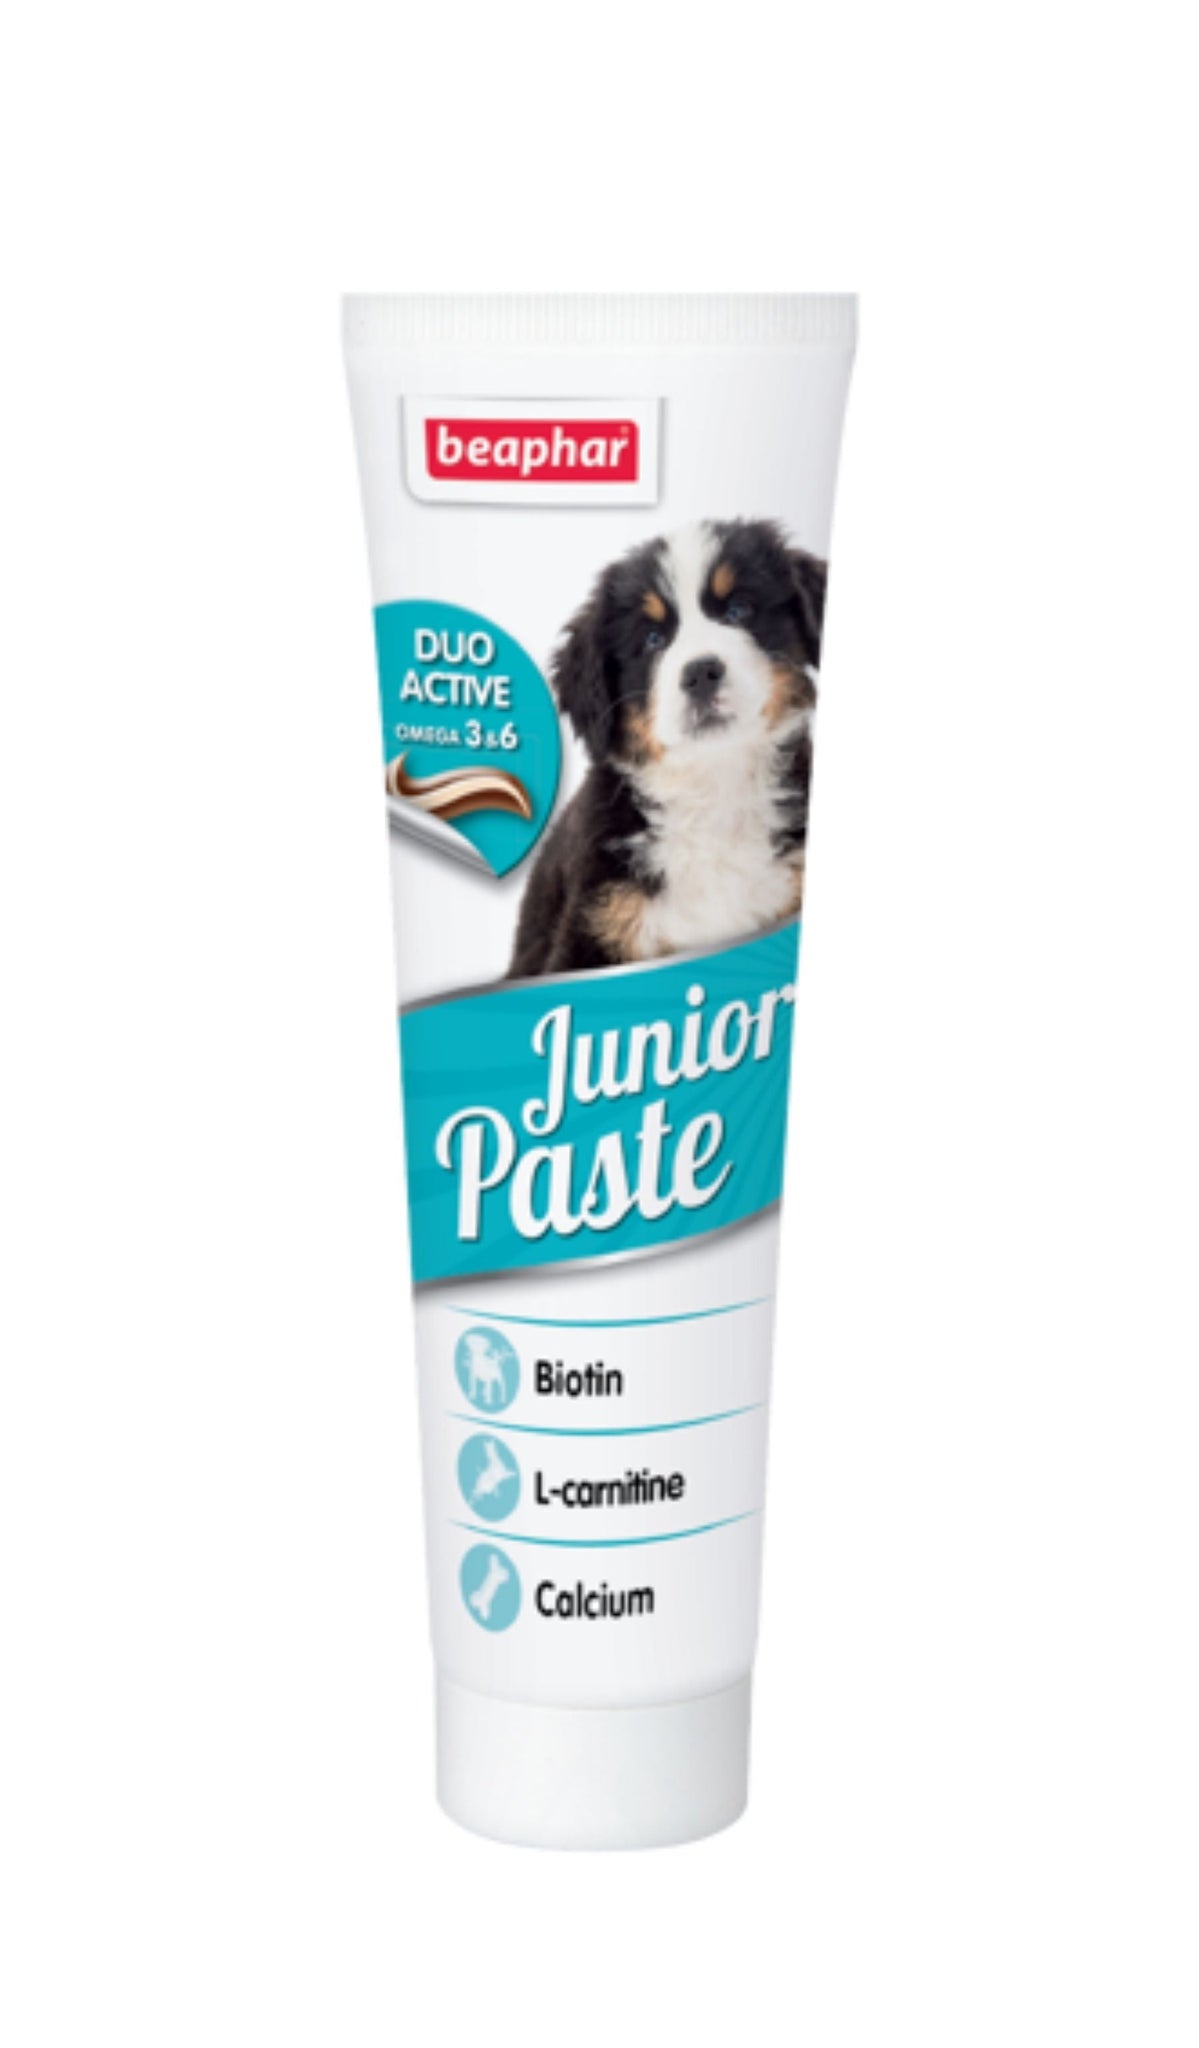 Beaphar Junior Paste Dog 100g petbay.lk